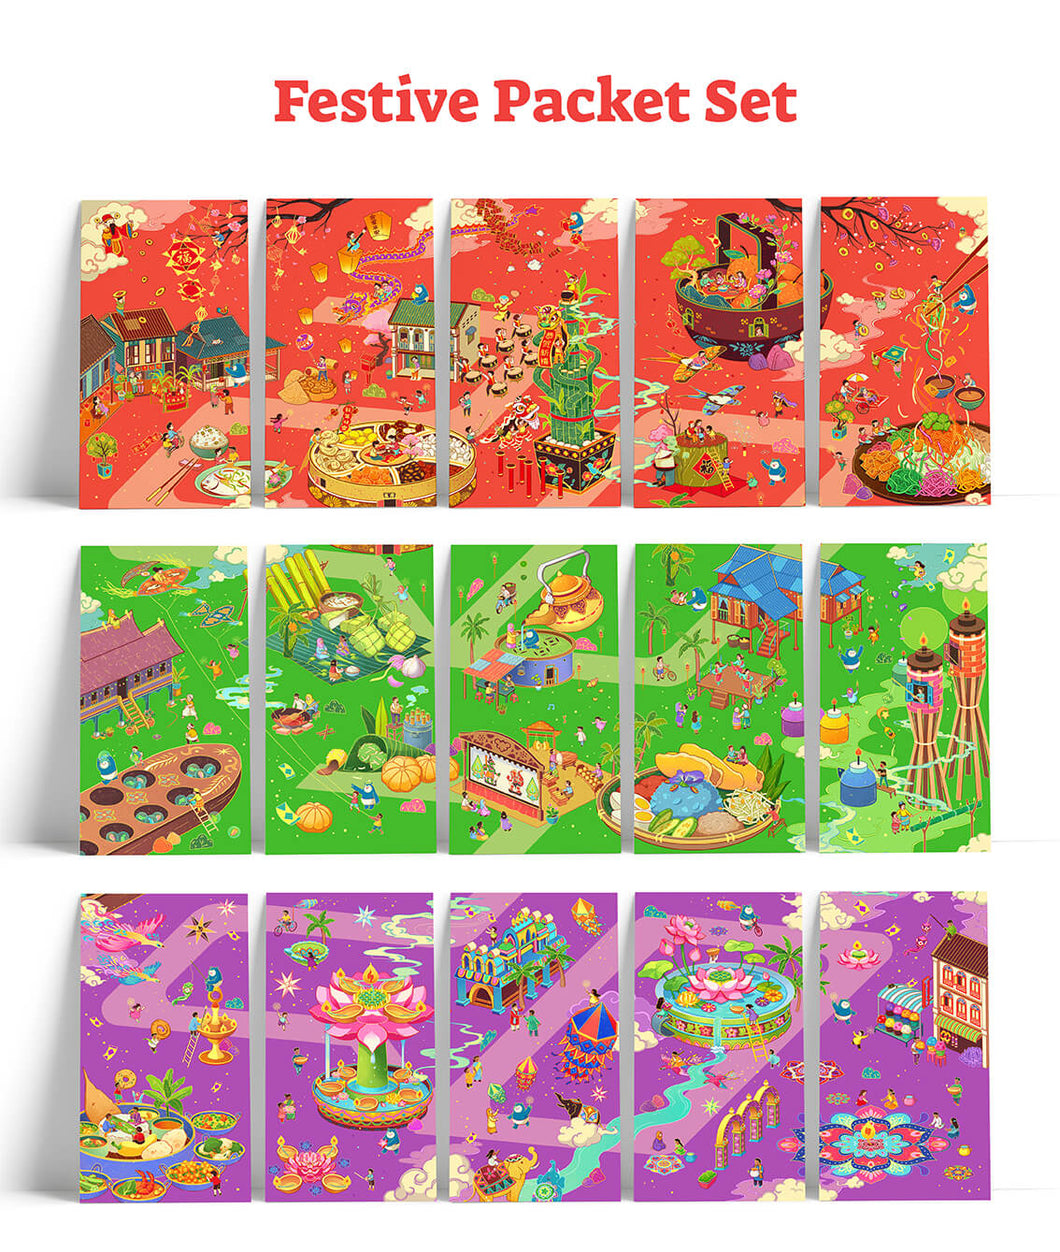 Festive Packet Set 1